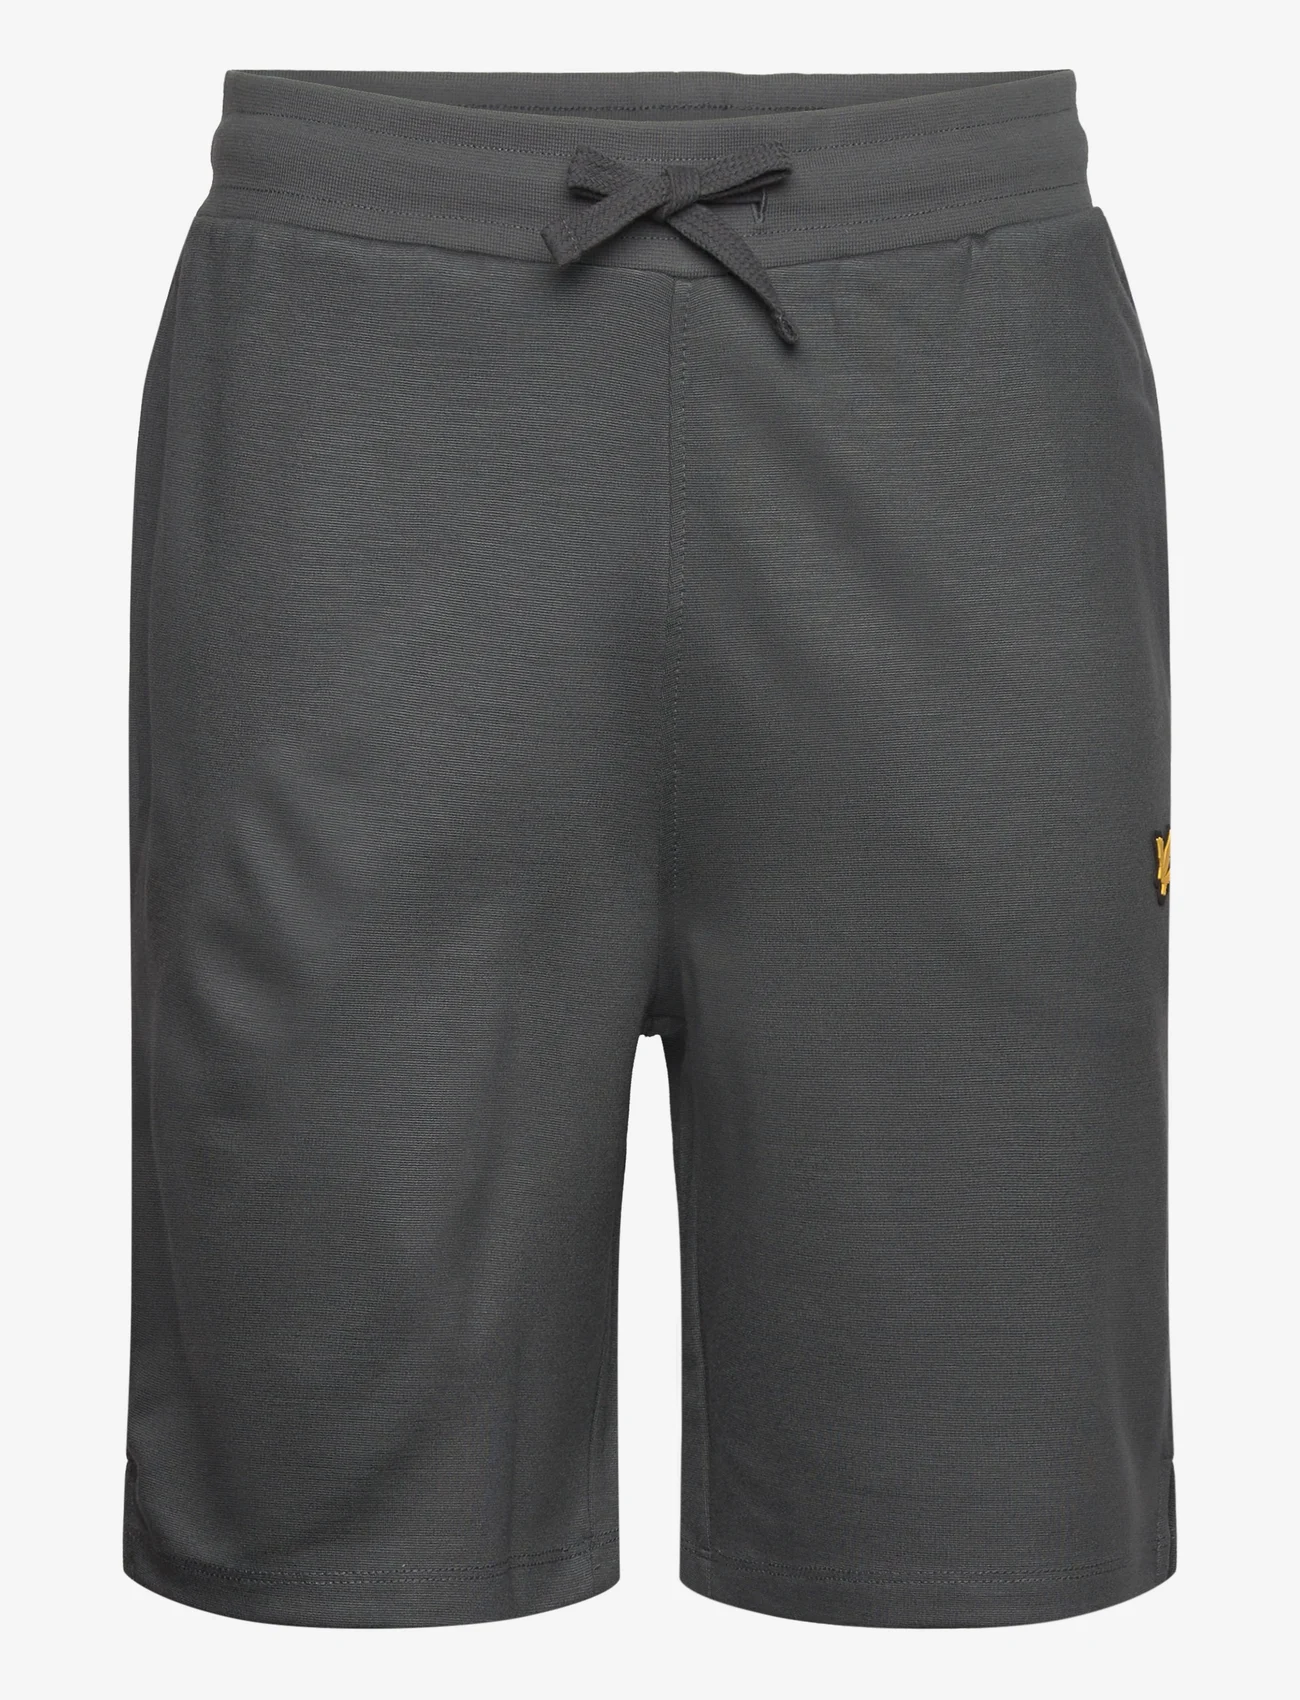 Lyle & Scott Sport - Fly Fleece Shorts - sports shorts - x129 graphite - 0